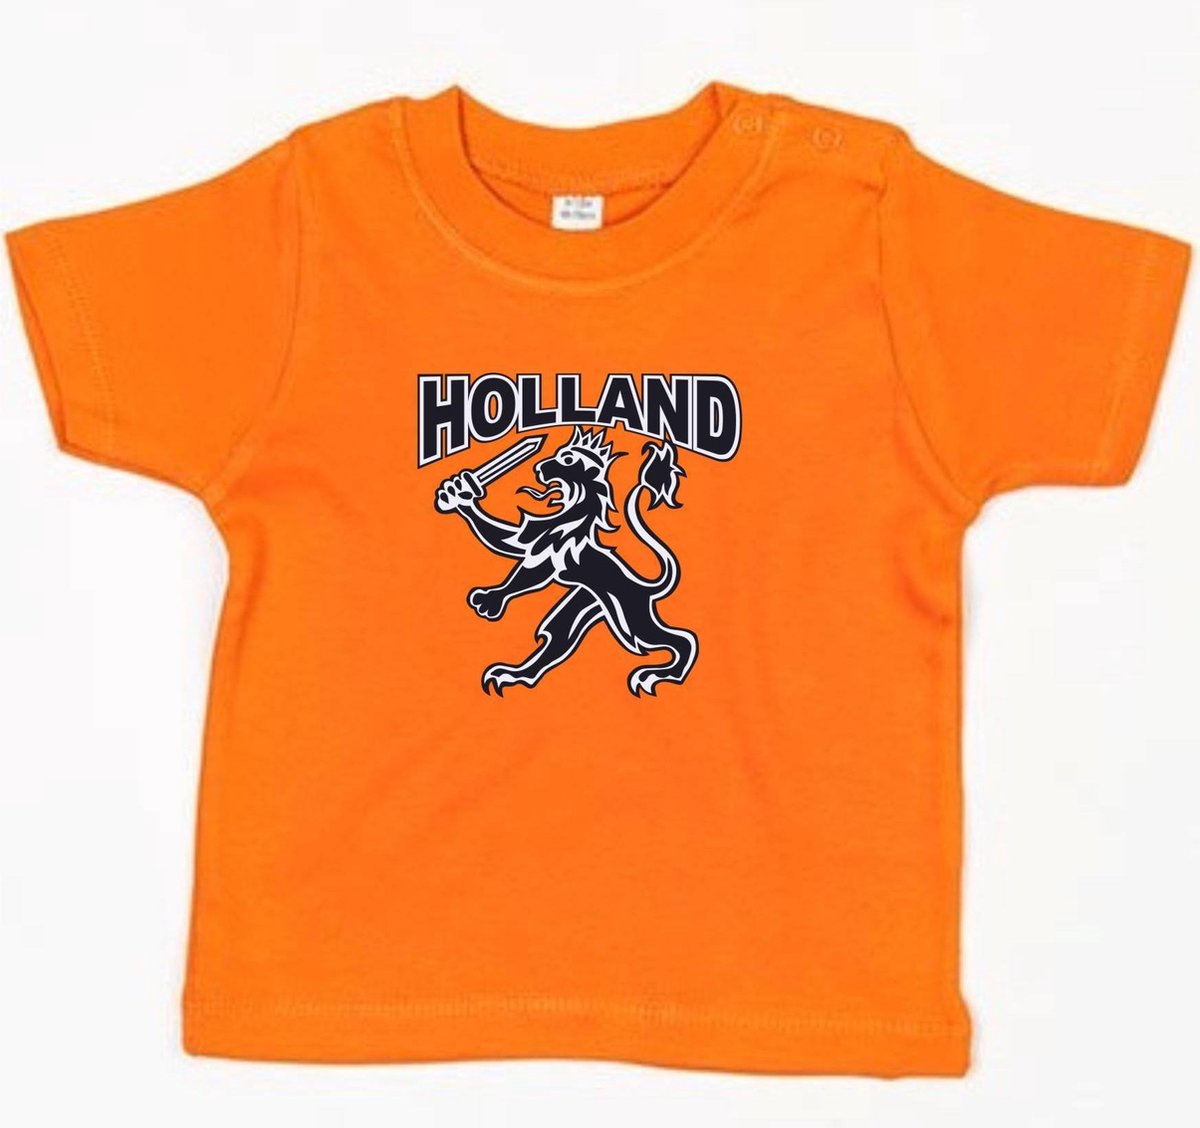 T-shirt oranje Holland met leeuw baby | WK Voetbal Qatar 2022 | Nederlands elftal babyshirt | Nederland supporter | Holland souvenir | Maat 80